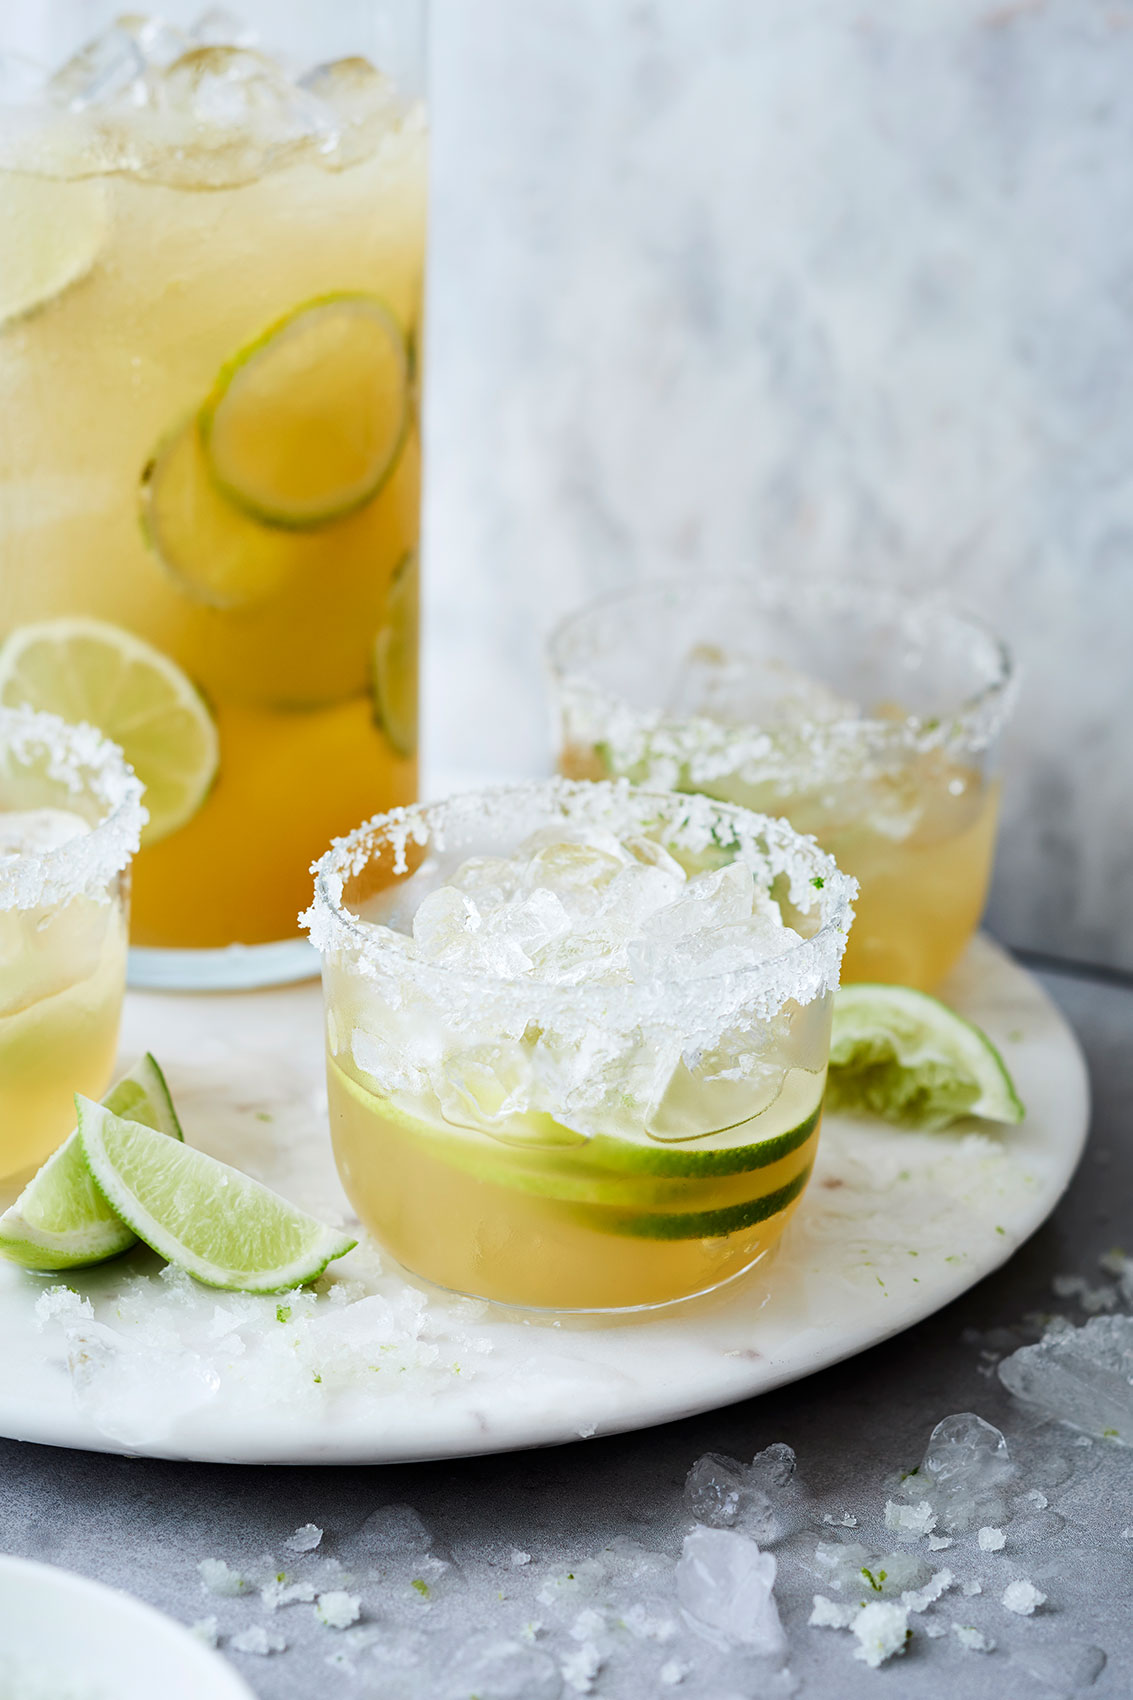 Salt Margarita with Fresh Lime Slices • Liquid & Beverage Photography